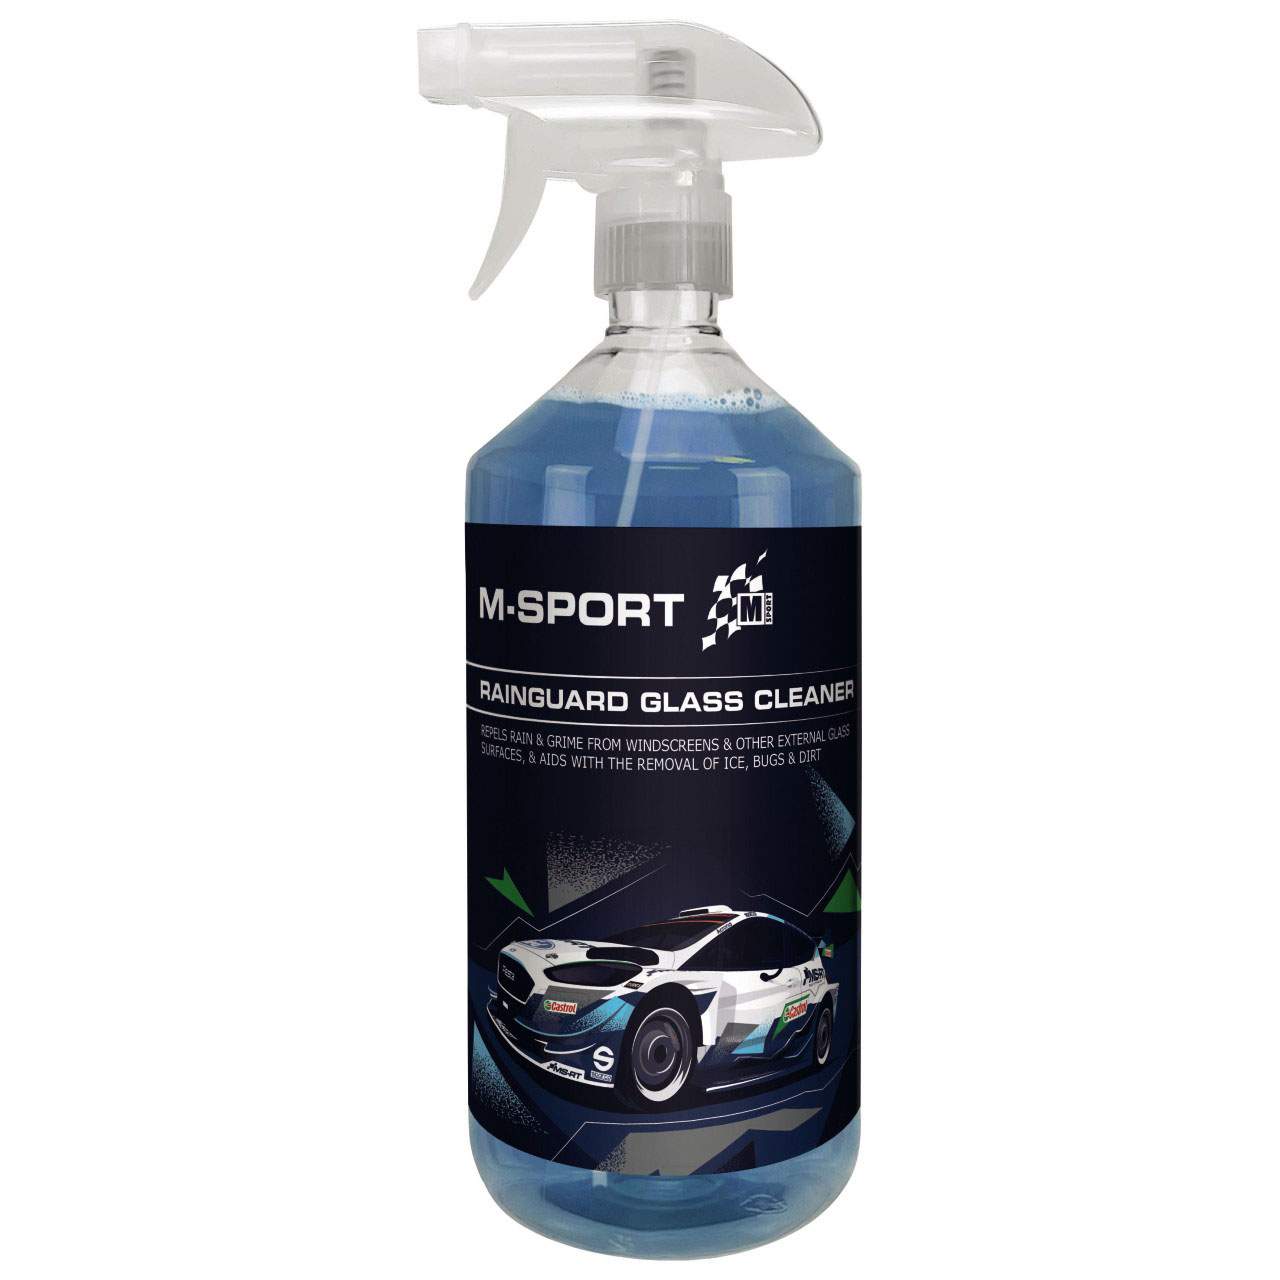 M-Sport Rainguard Glass Cleaner